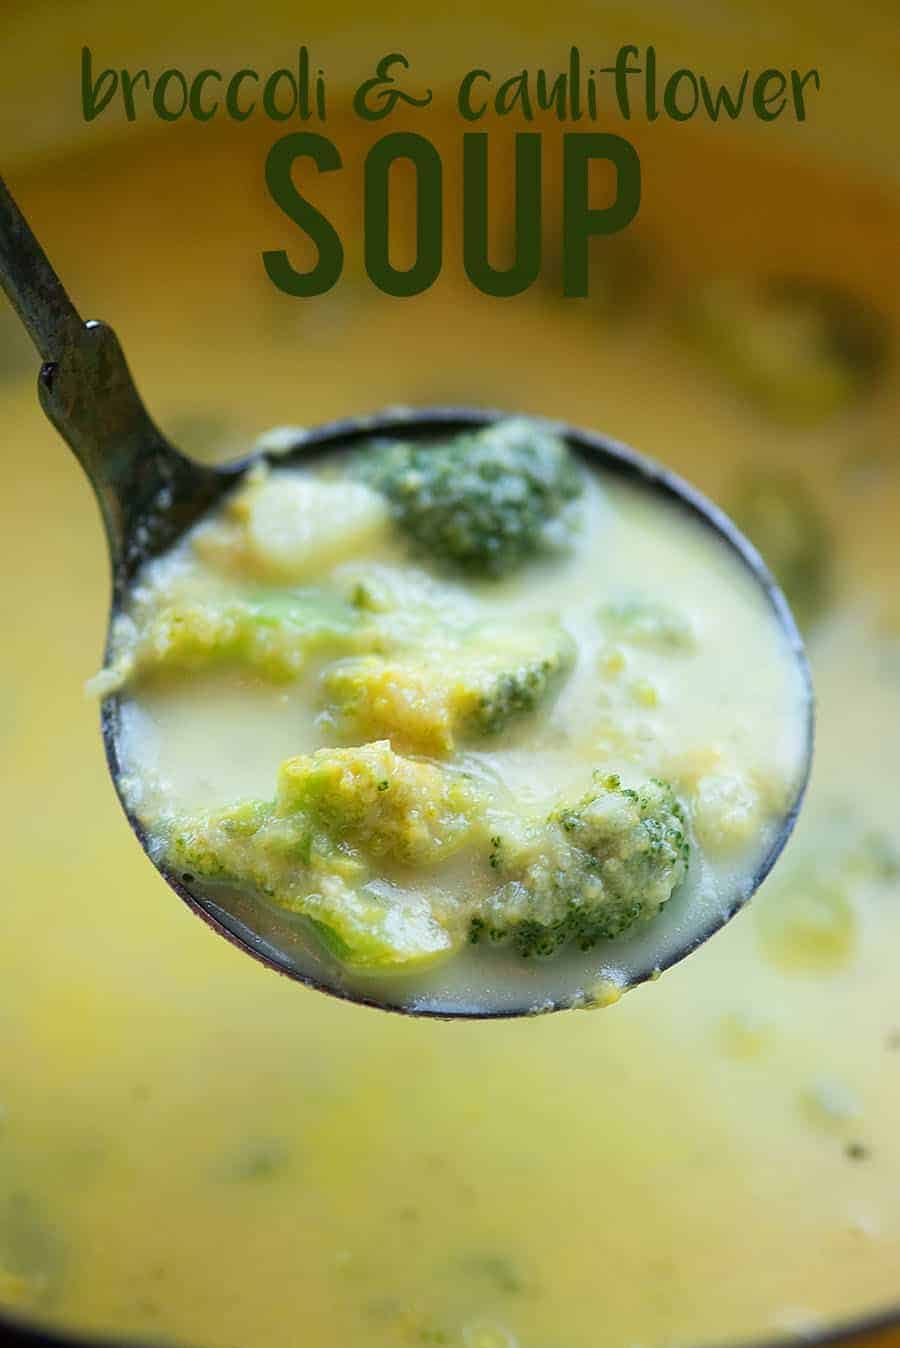 Laddle of broccoli cauliflower soup